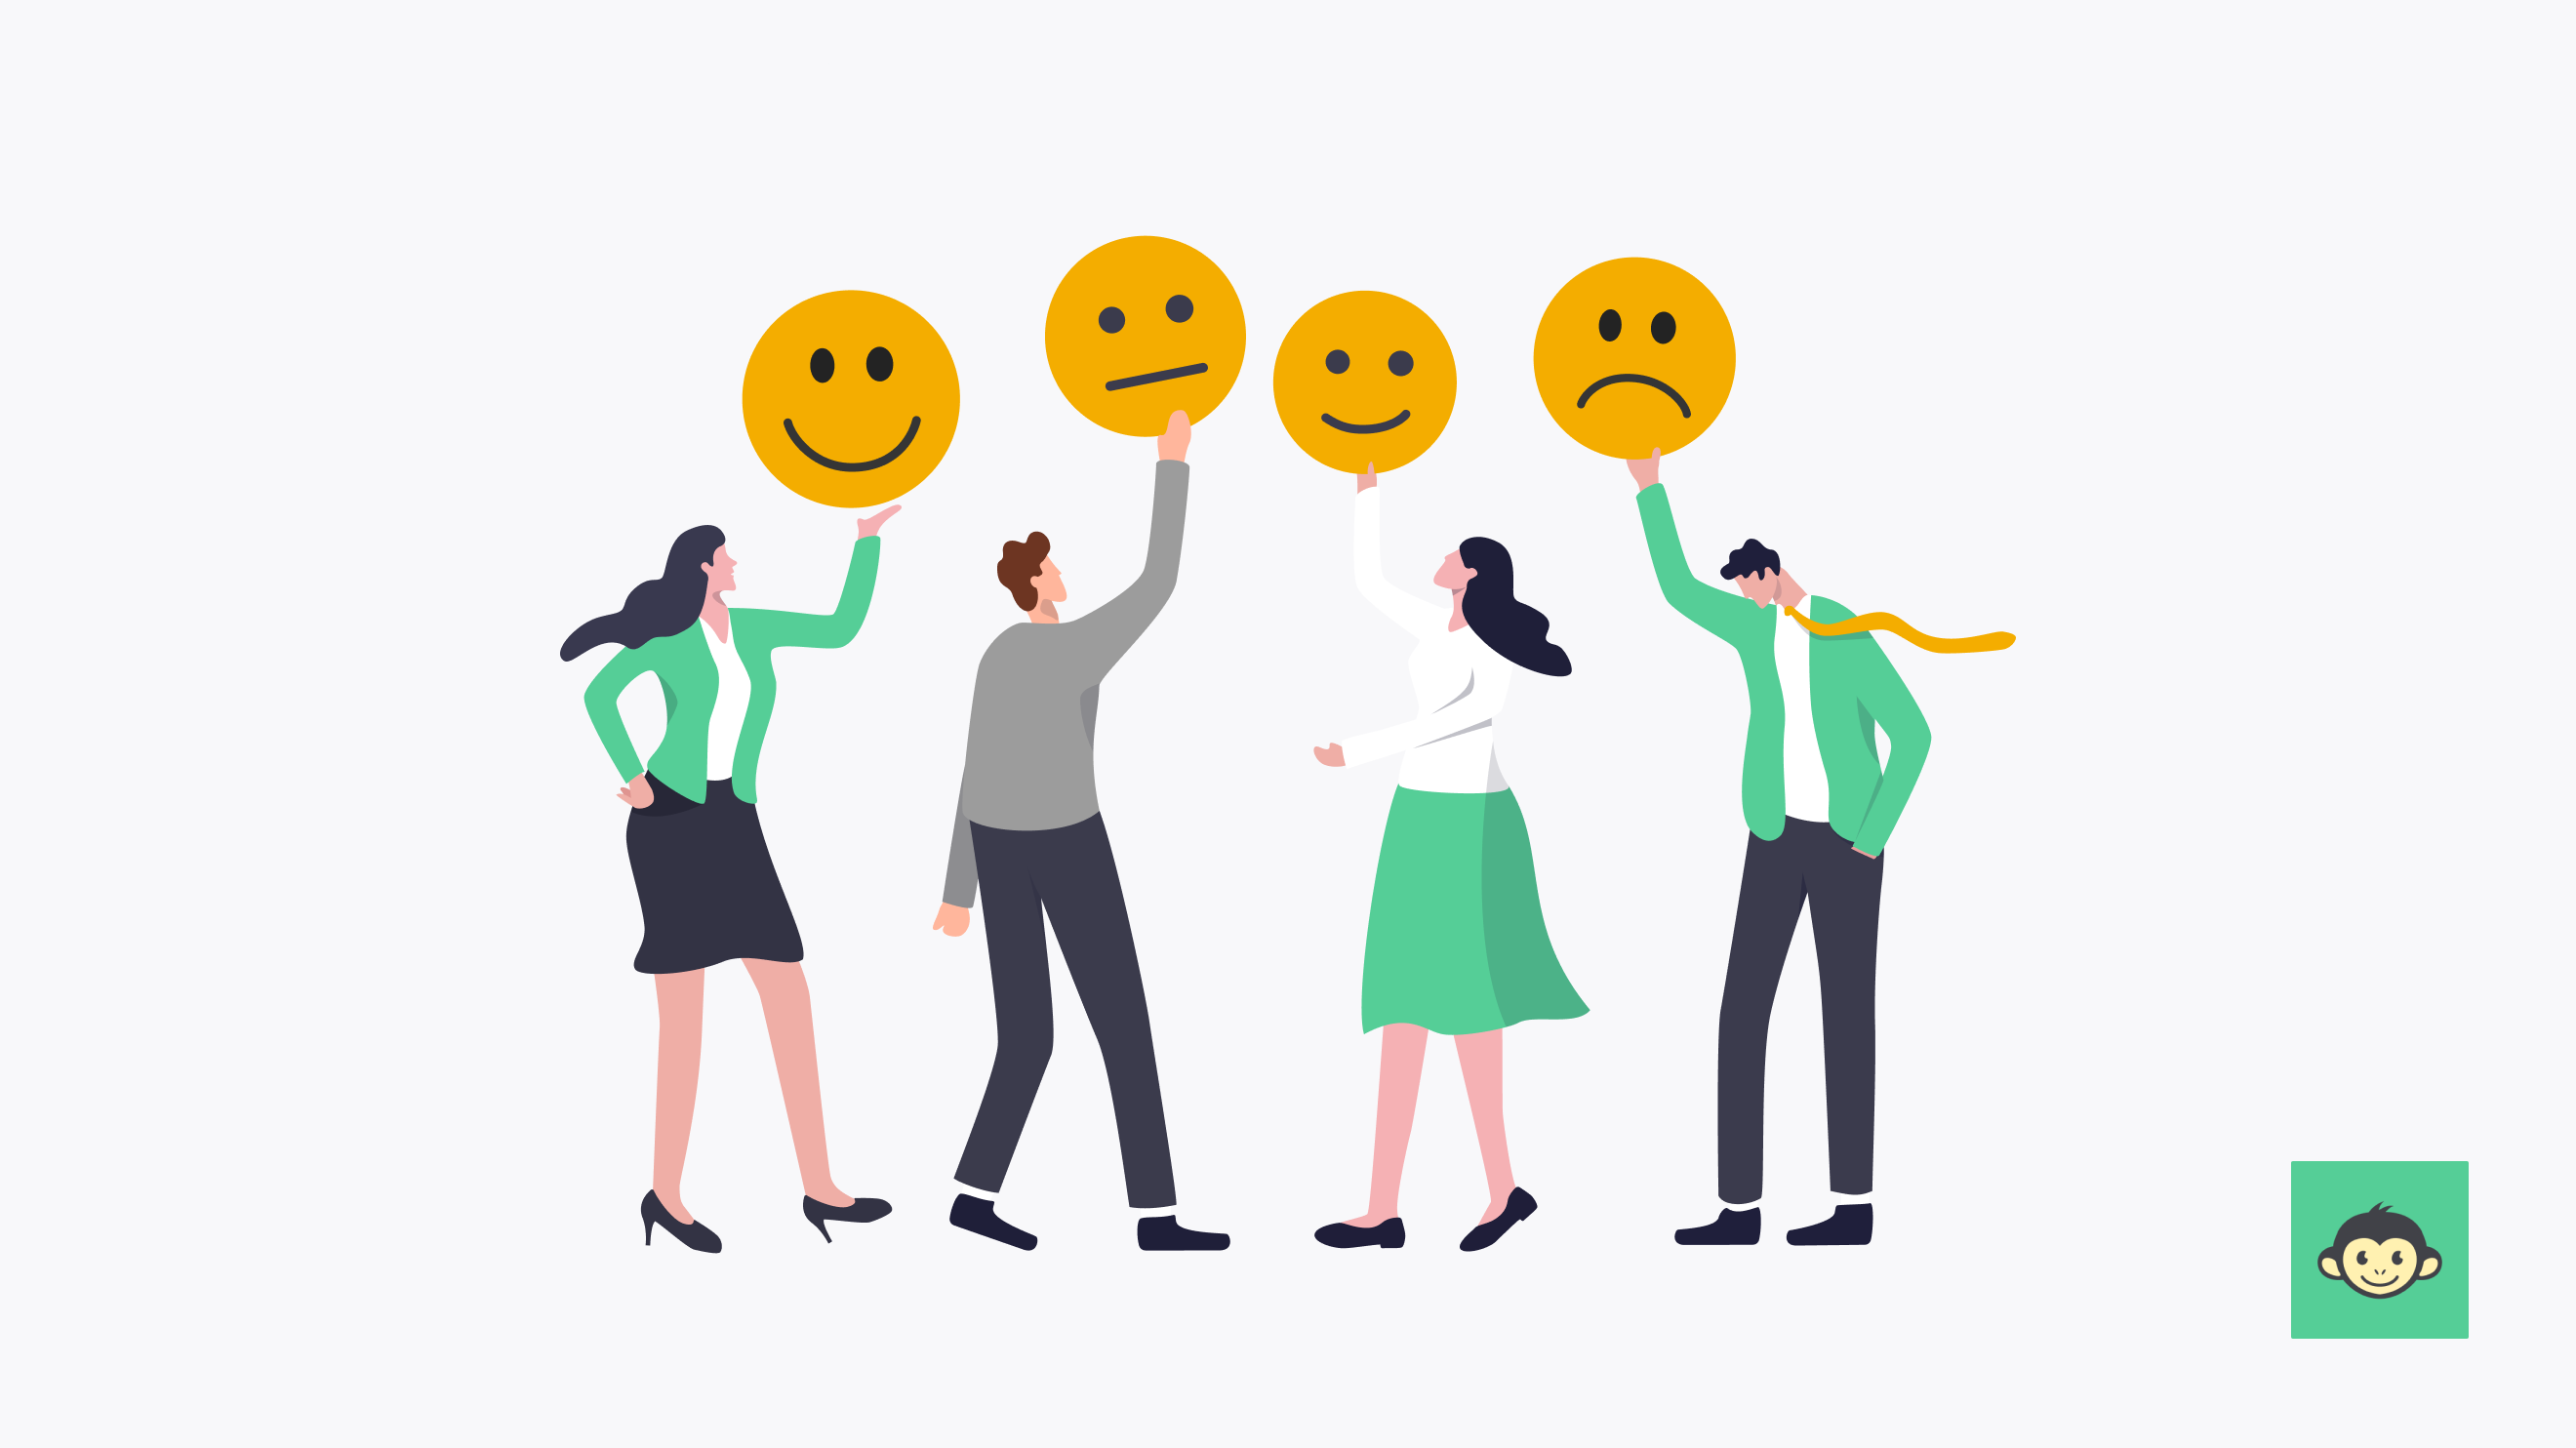 Top 31 employee net promoter score questions to measure employees' satisfaction